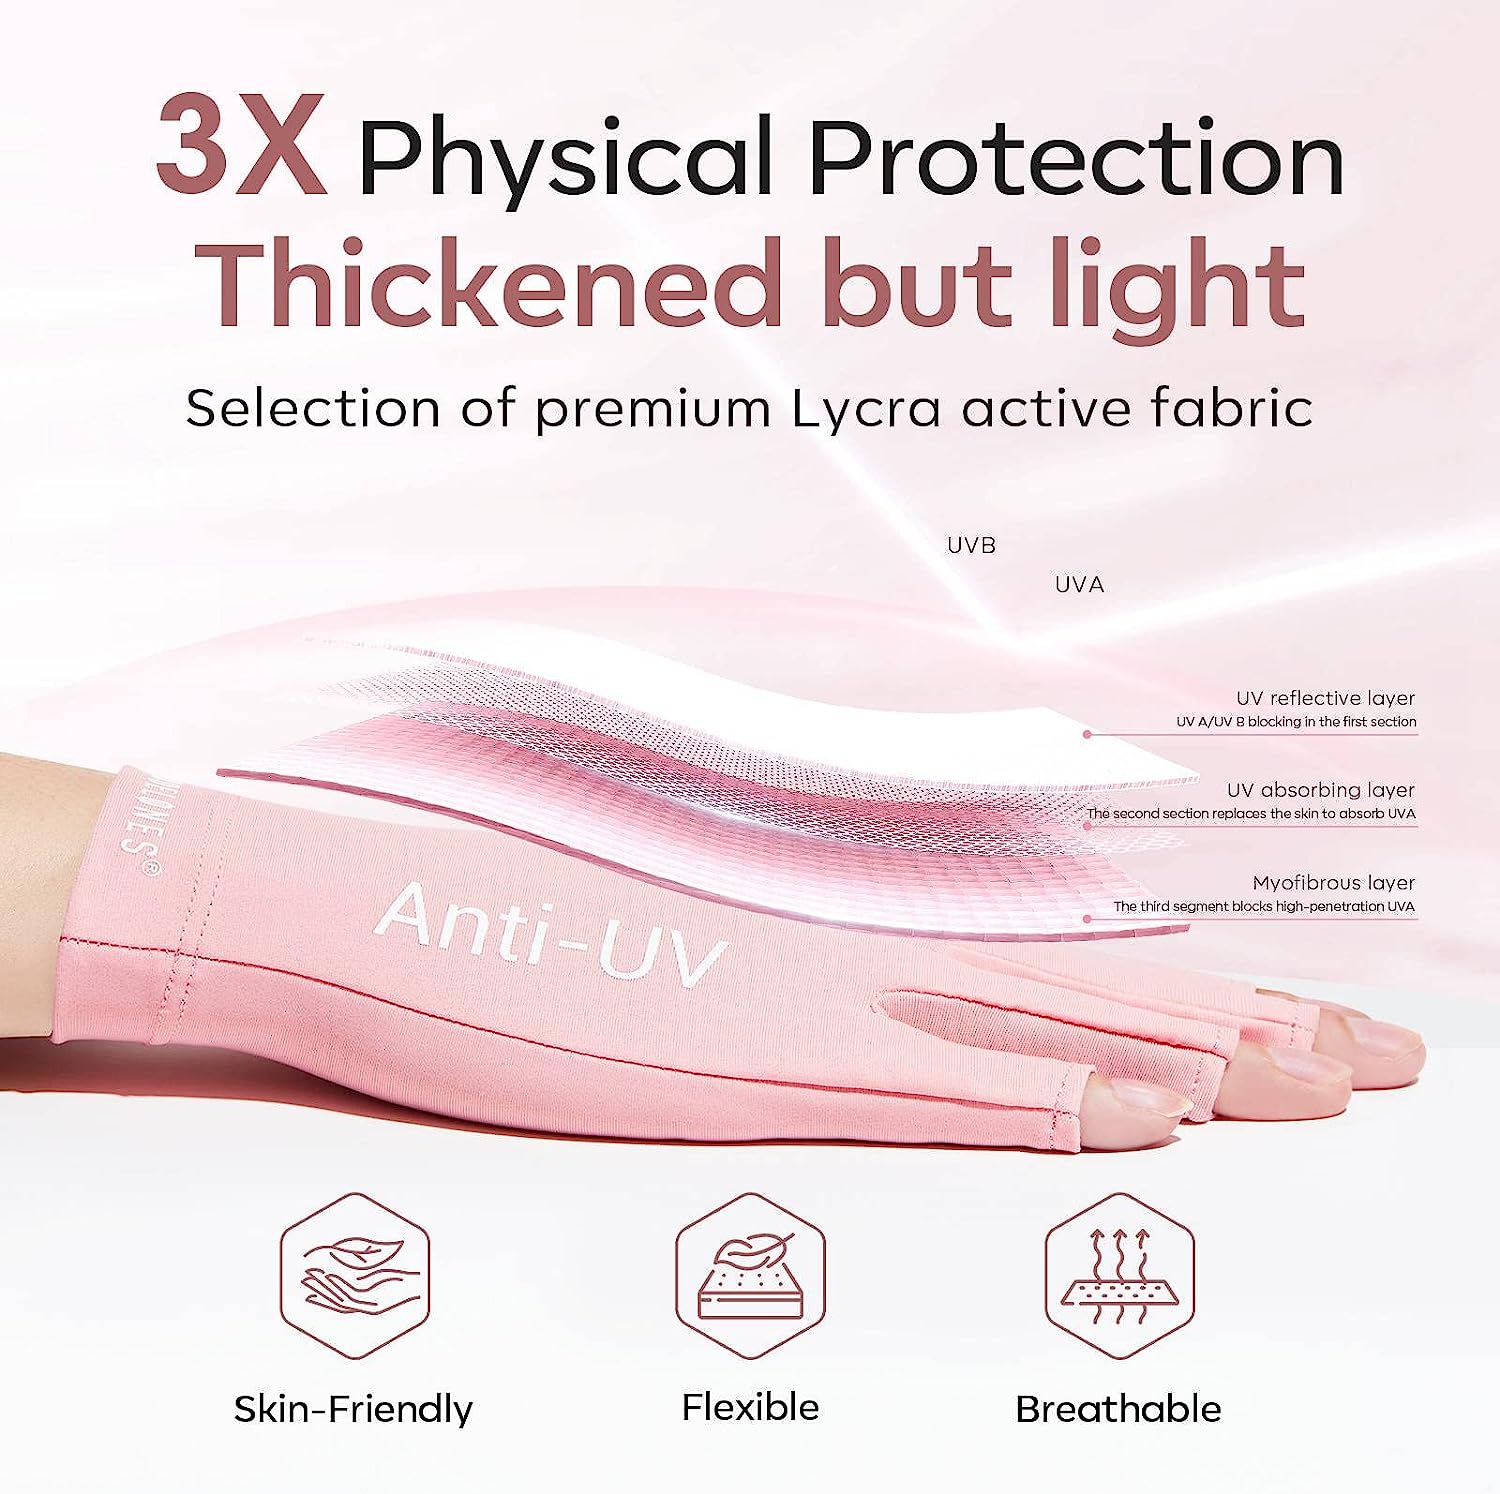 Anti-UV light Glove With 48W Nail Lamp For Nails  Salon Professional UPF 99+